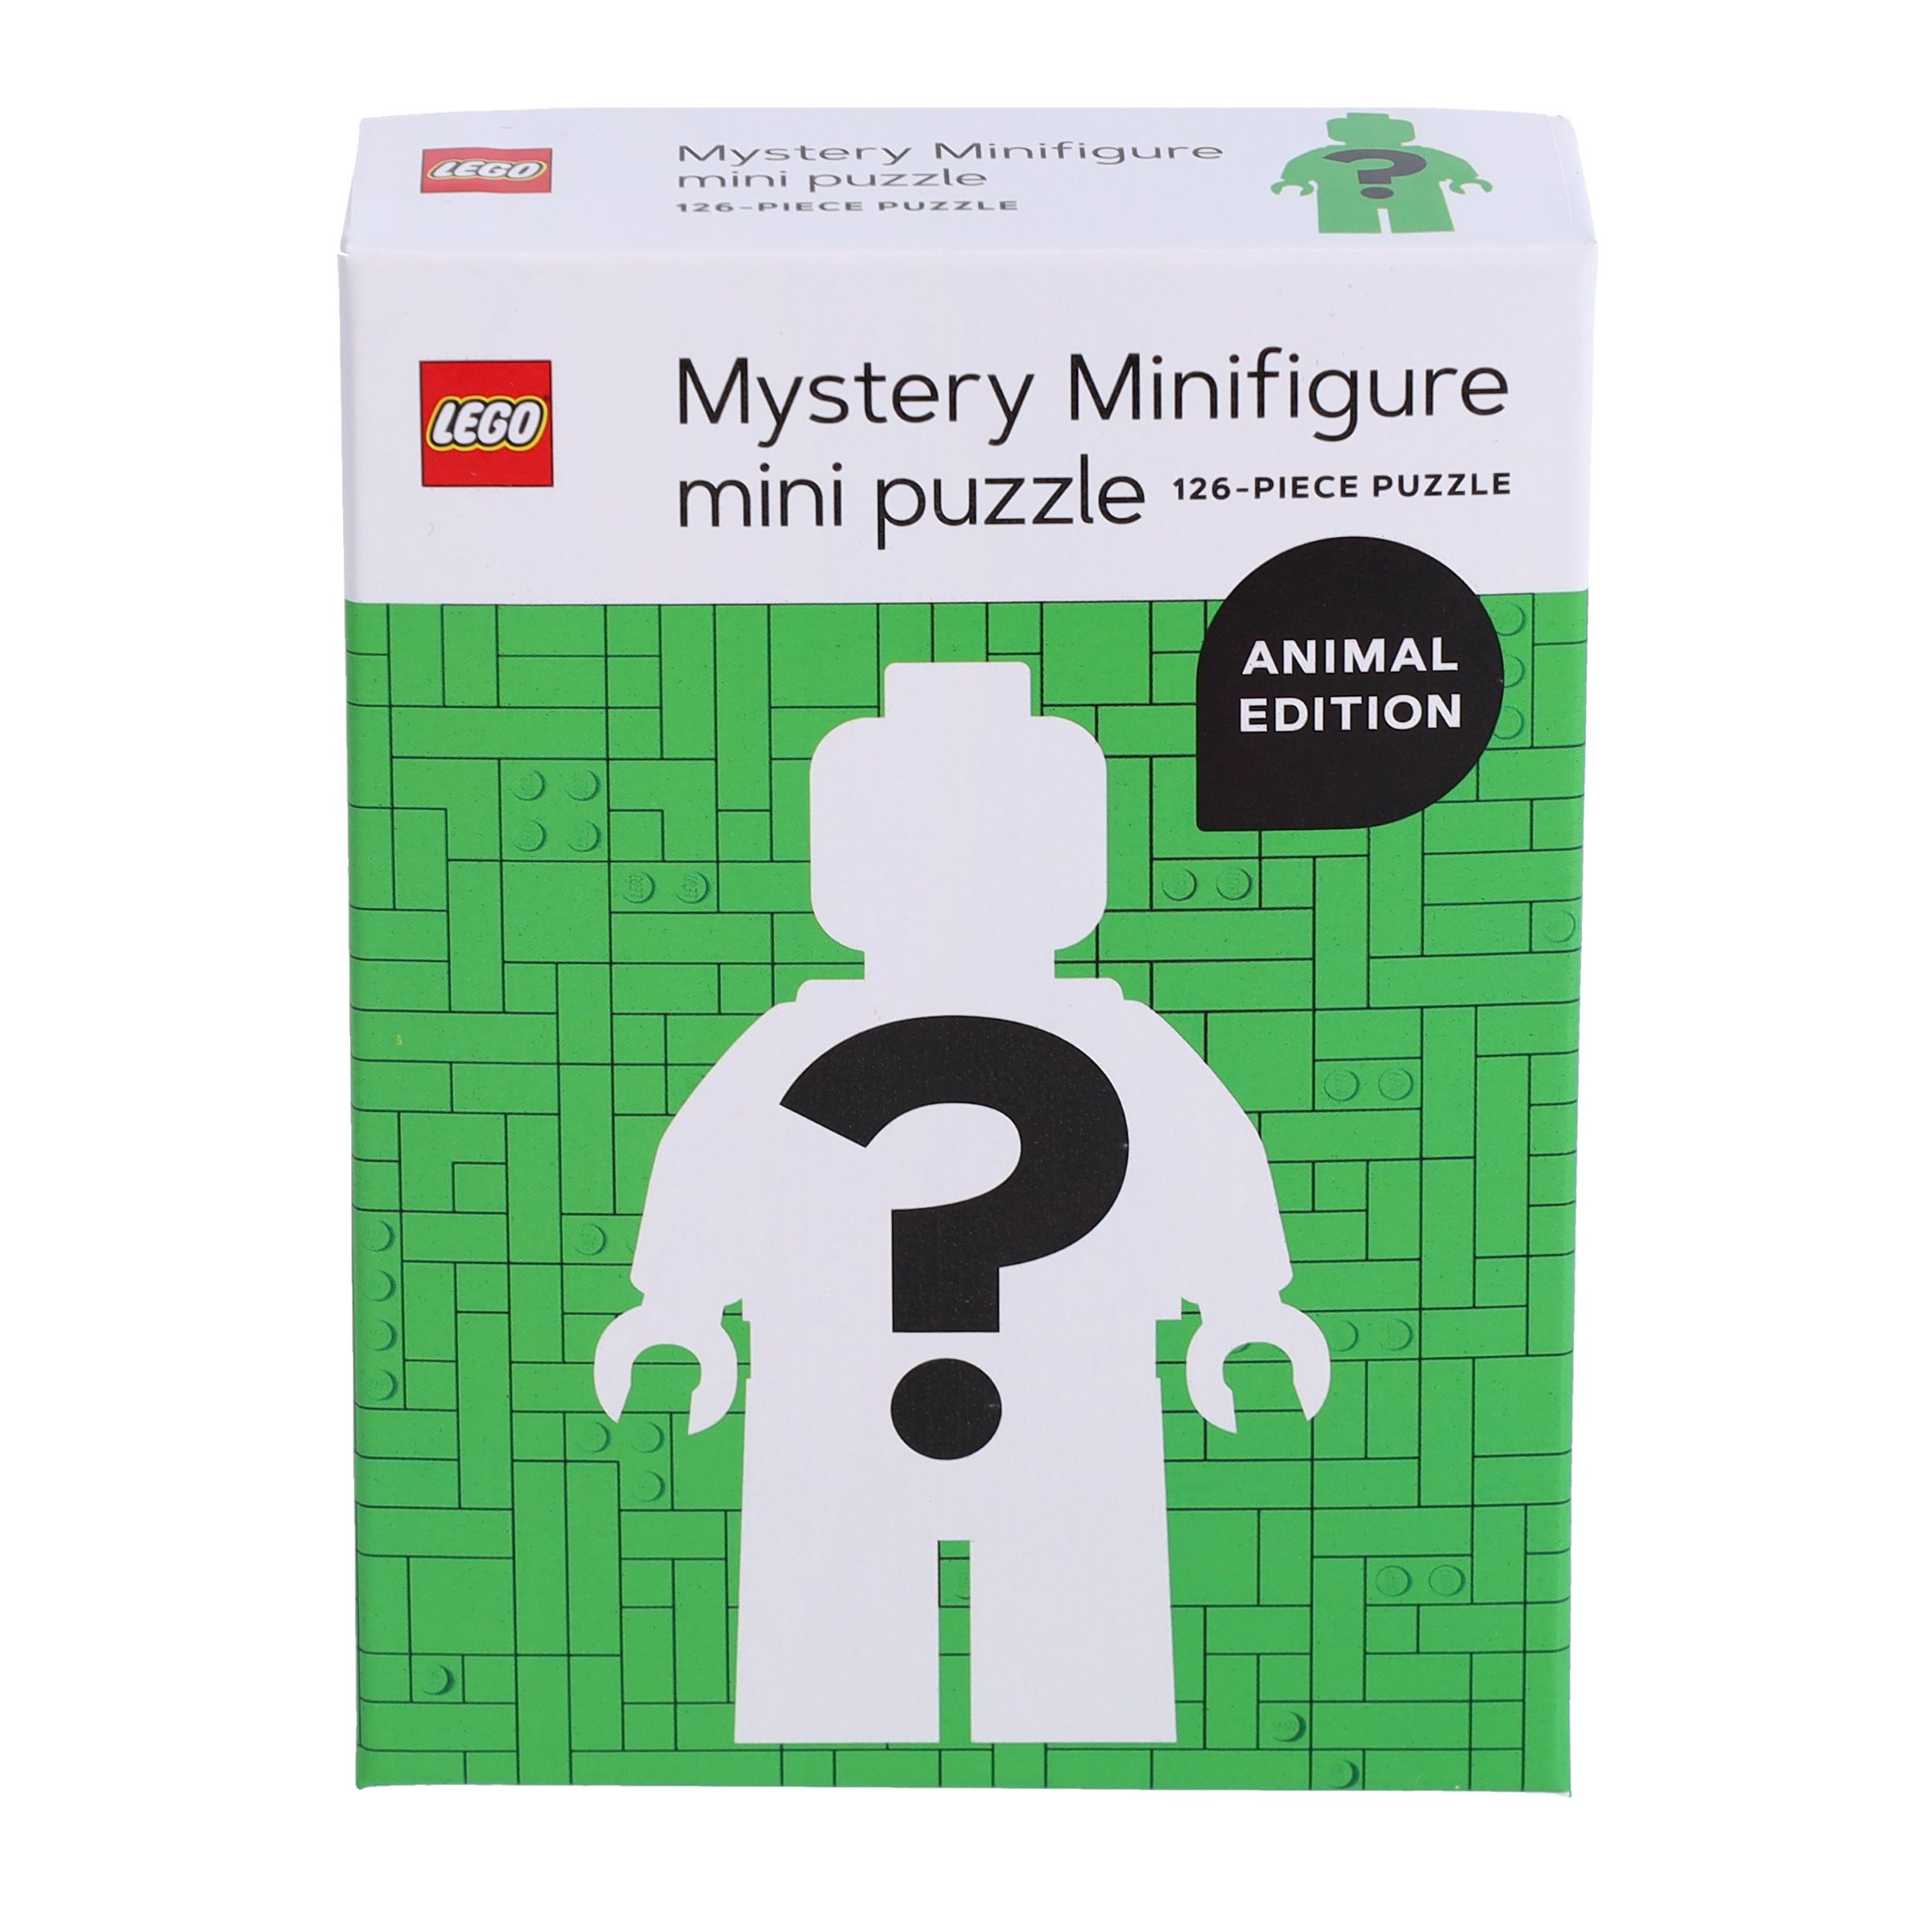 Mini LEGO Puzzle Box - Another LEGO Puzzle Idea 